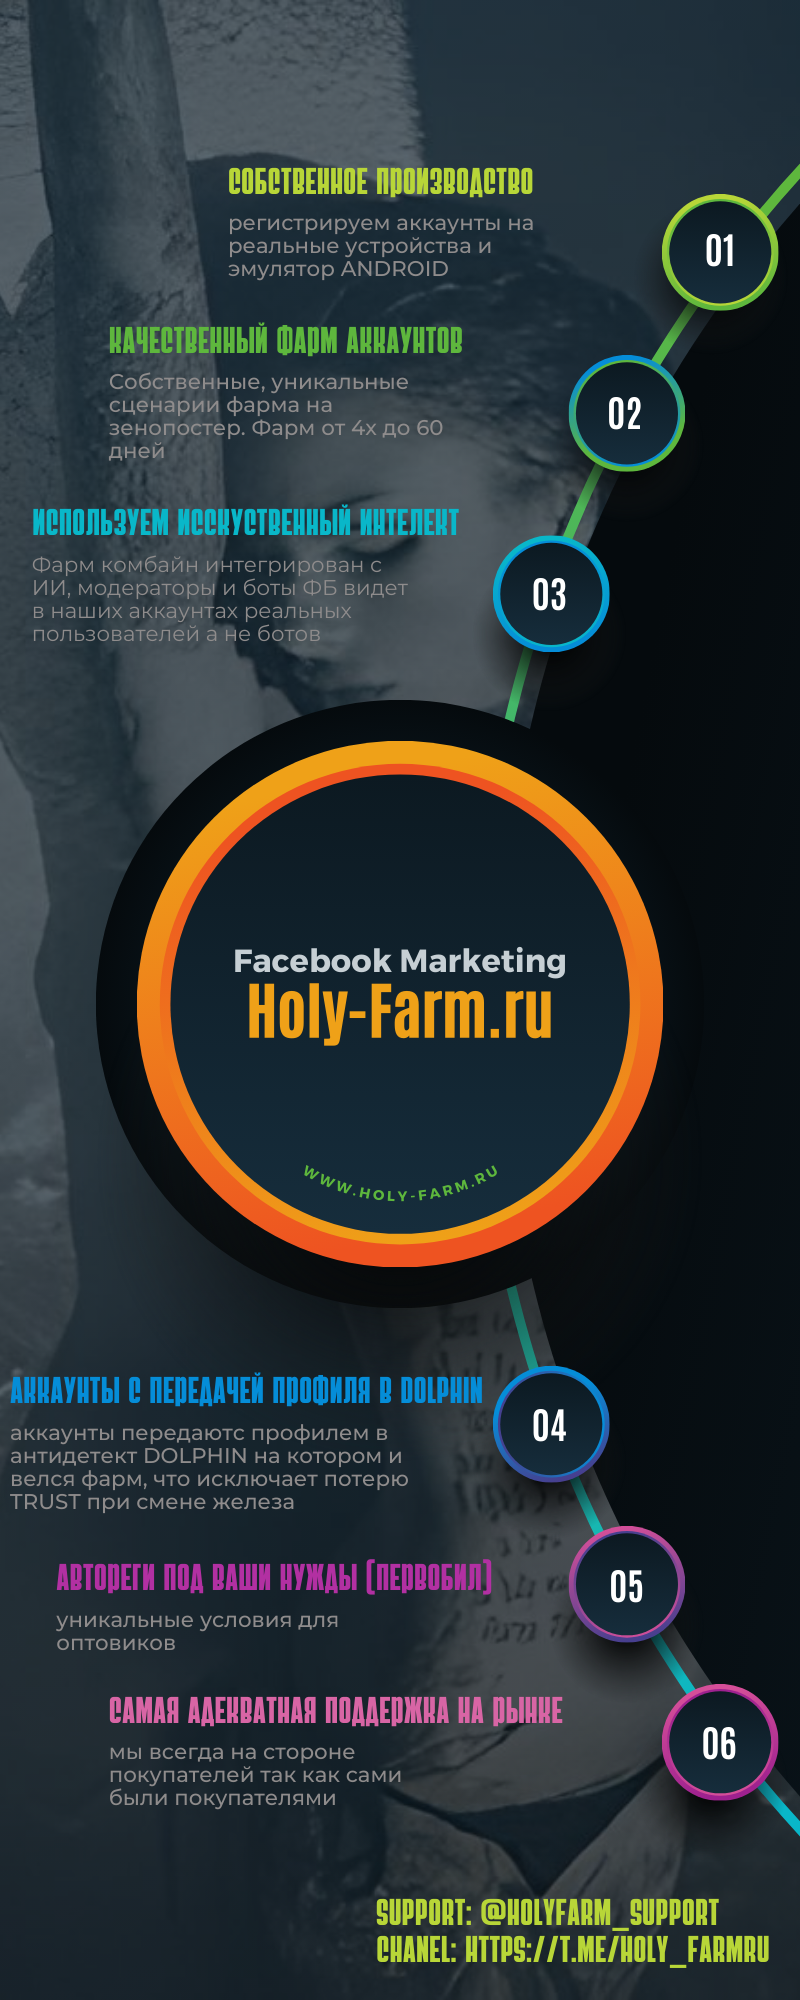 holy-farm.ru.png